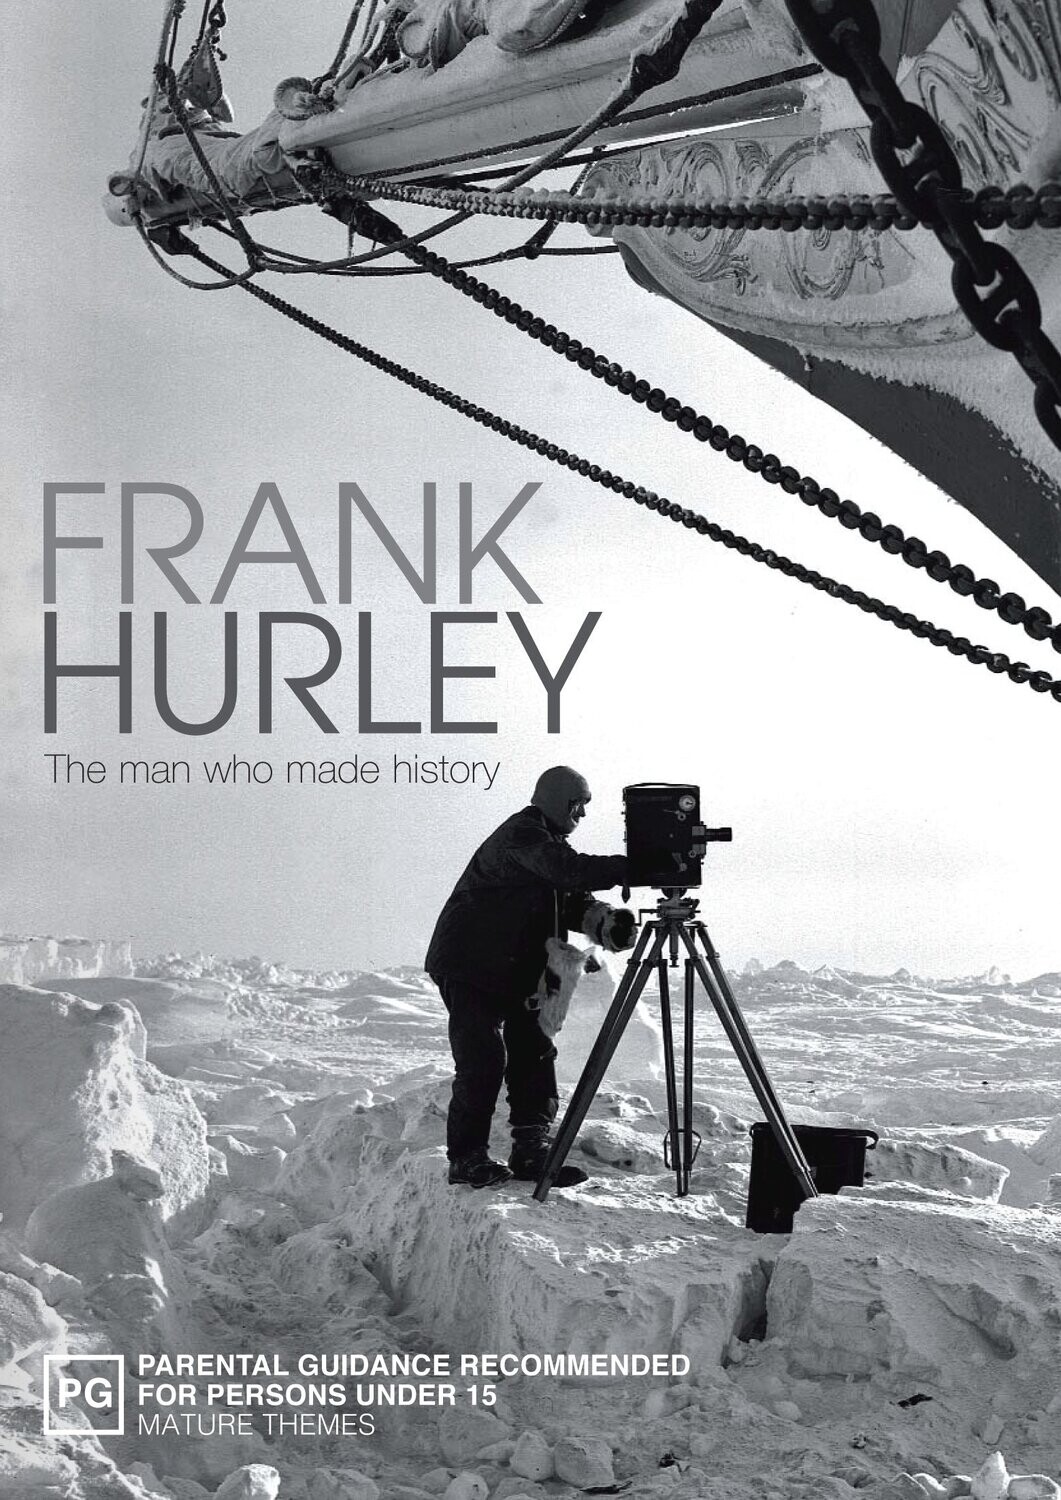 Frank Hurley: The Man Who Made History by Simon Nasht